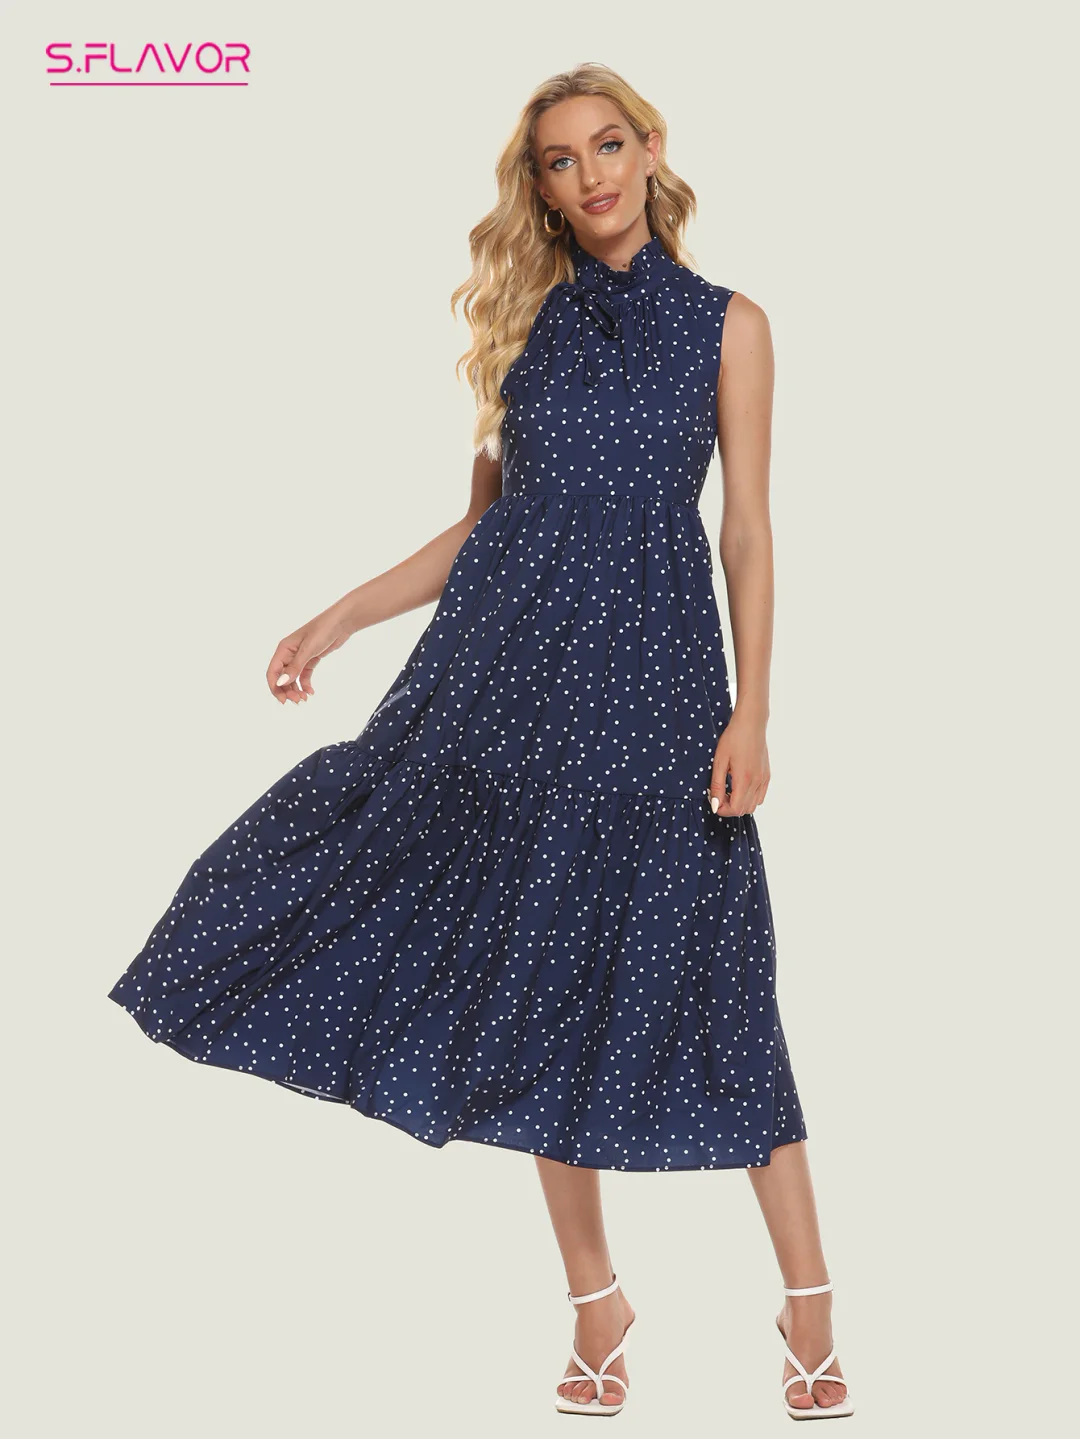 Jangj S.FLAVOR Vintage Dot Wave Print Retro Dresses Bohemian Fashion Sleeveless A-line Dress For Women Casual Sundress